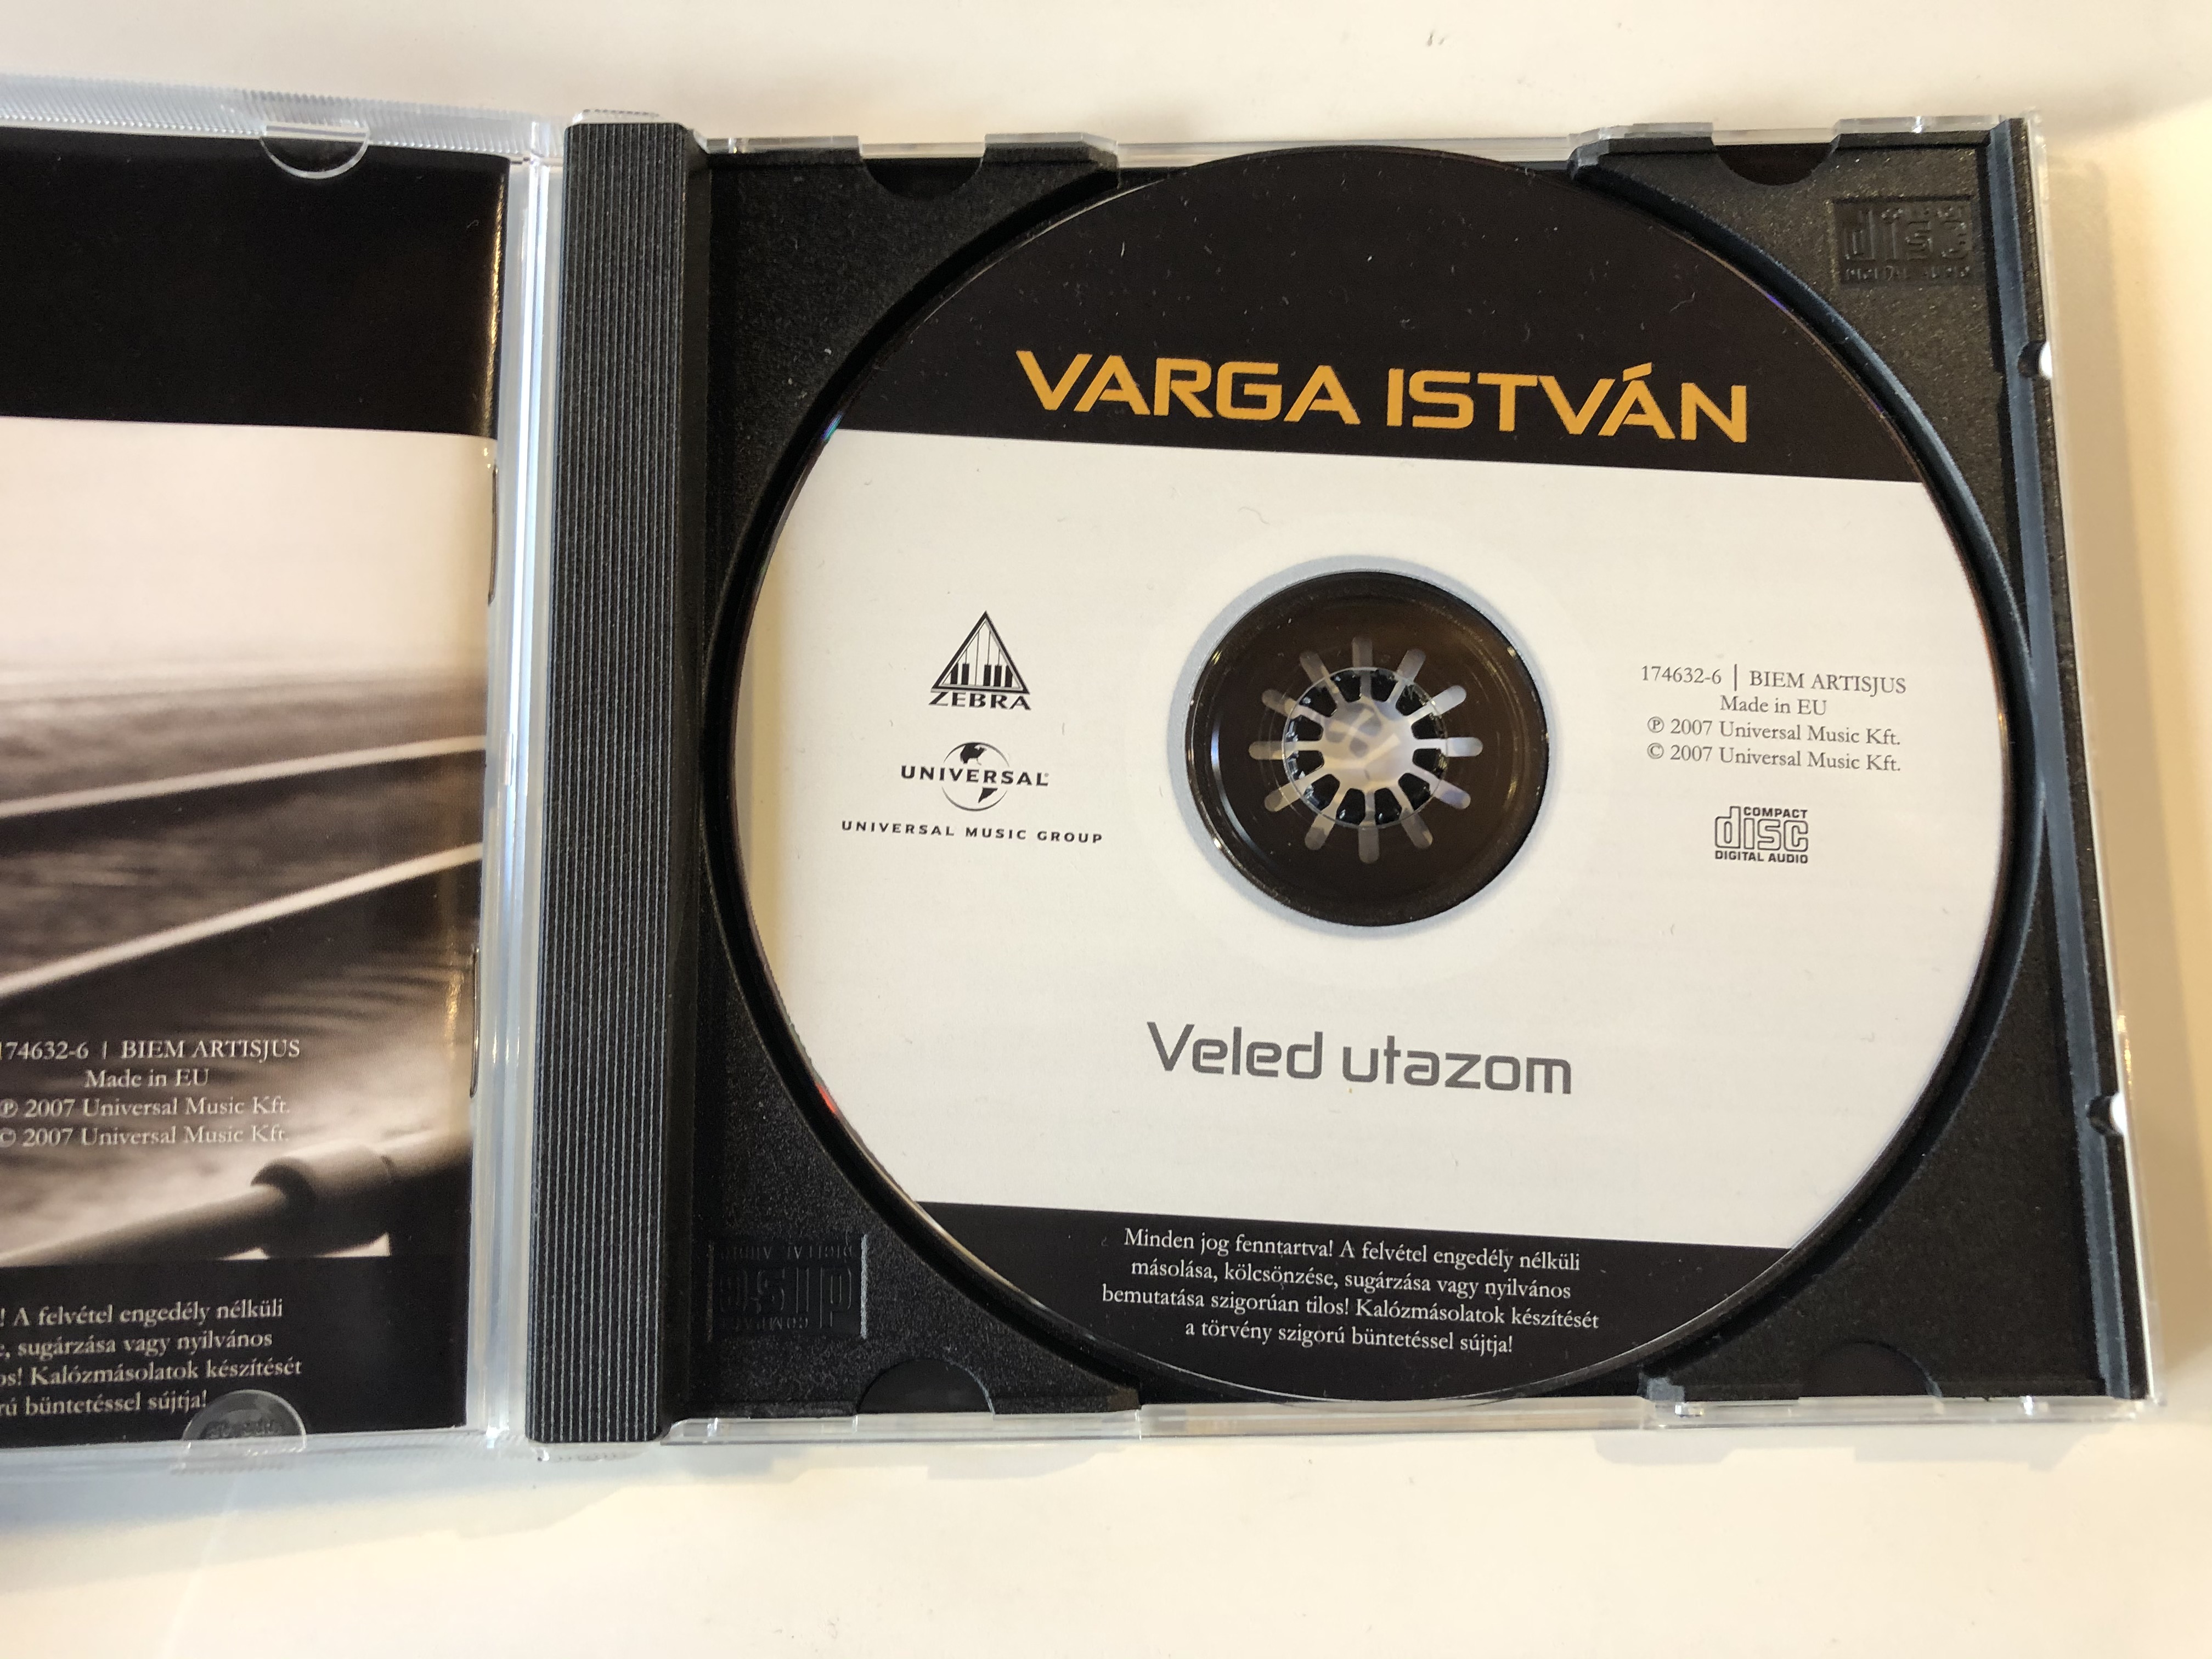 veled-utazom-varga-istv-n-universal-music-group-audio-cd-2007-174632-6-3-.jpg